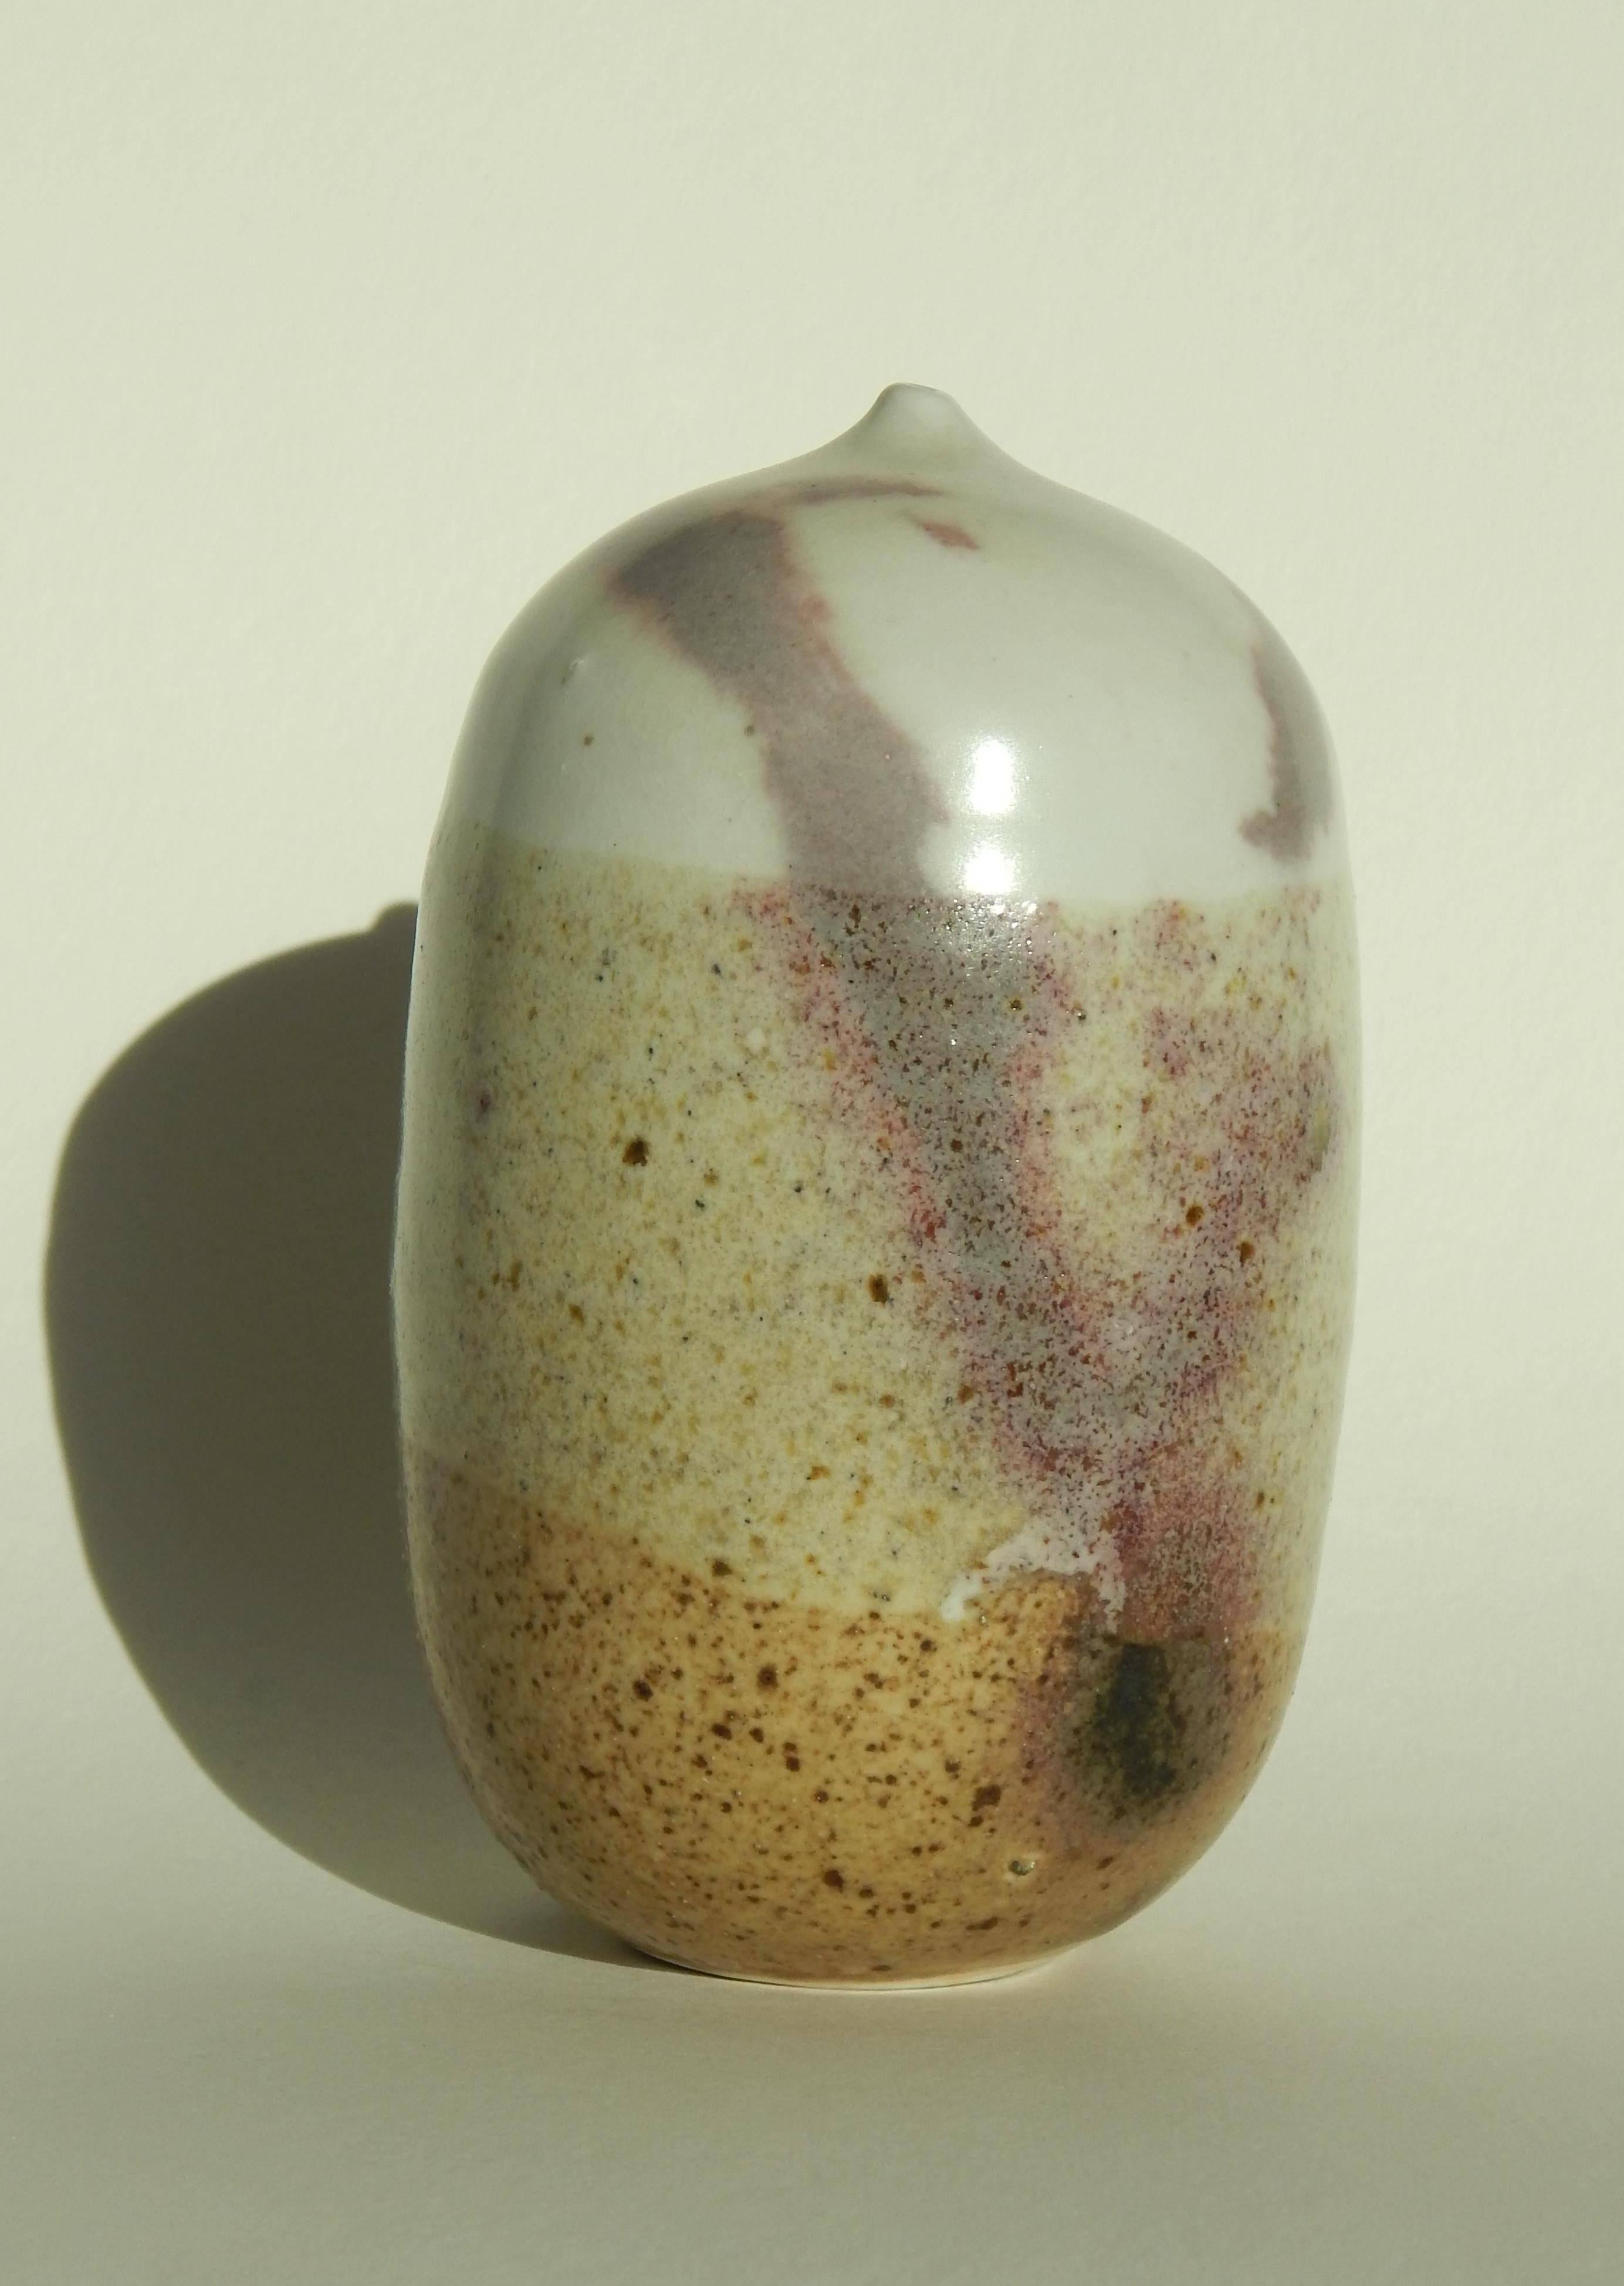 American Toshiko Takaezu, Important Studio Potter, Moon Pot with Rattle, Great Glaze